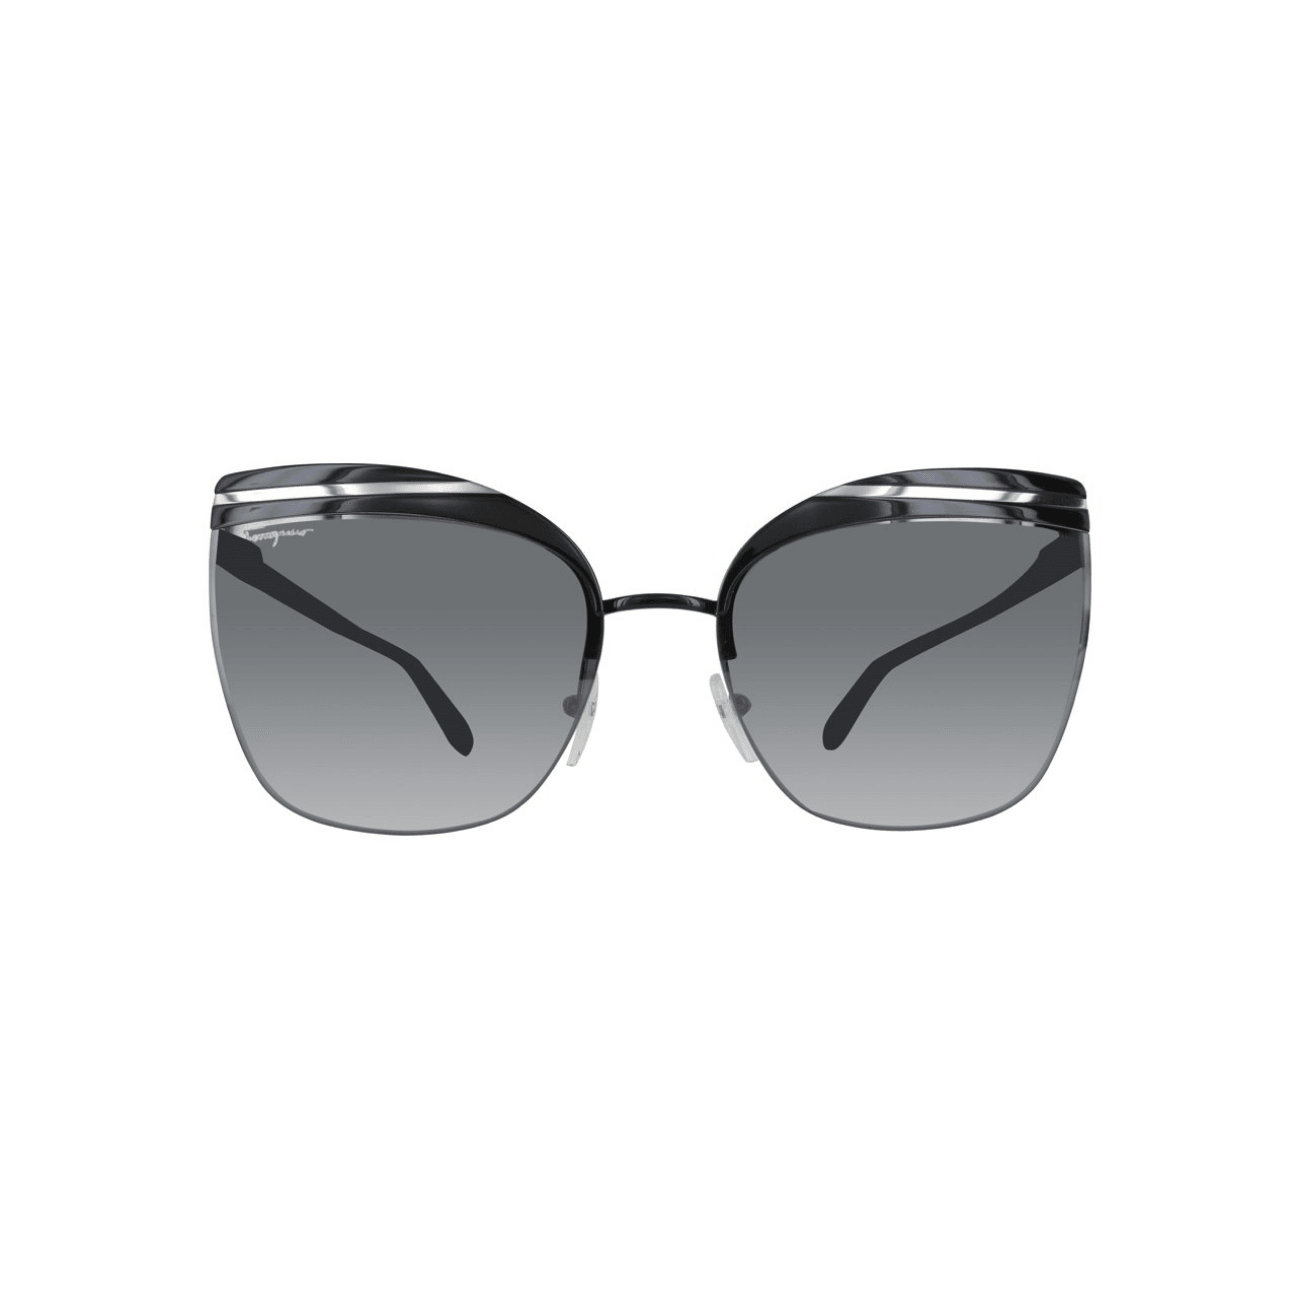 STYLIAN - Ferragamo SF166S-001-60 Oversize Women's Sunglasses, Shiny Black